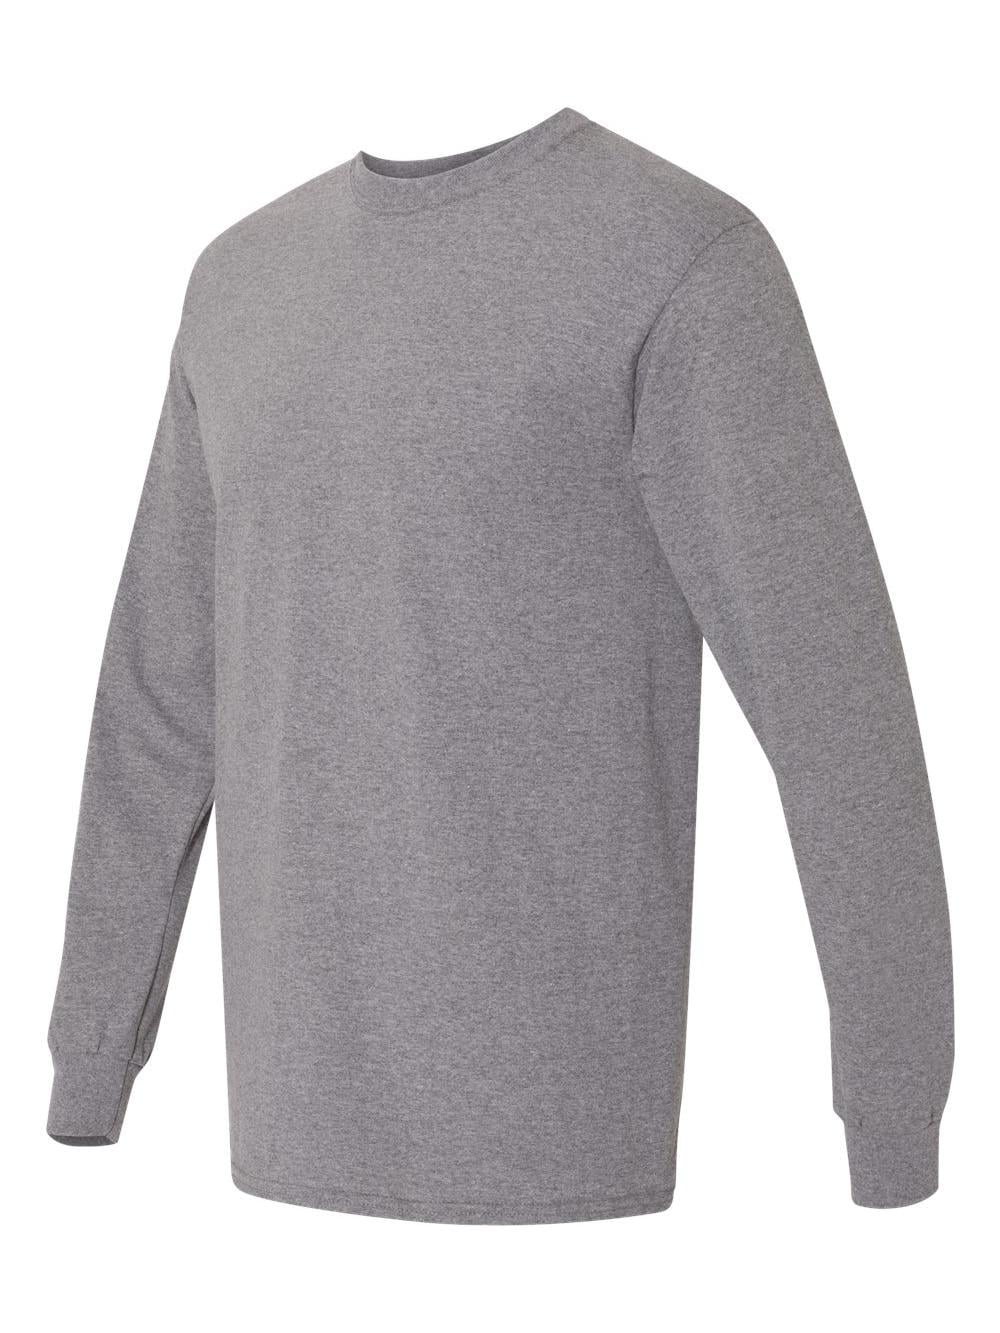 Black Gildan Mens 5.5 oz XXX-Large 50/50 Long-Sleeve T-Shirt 